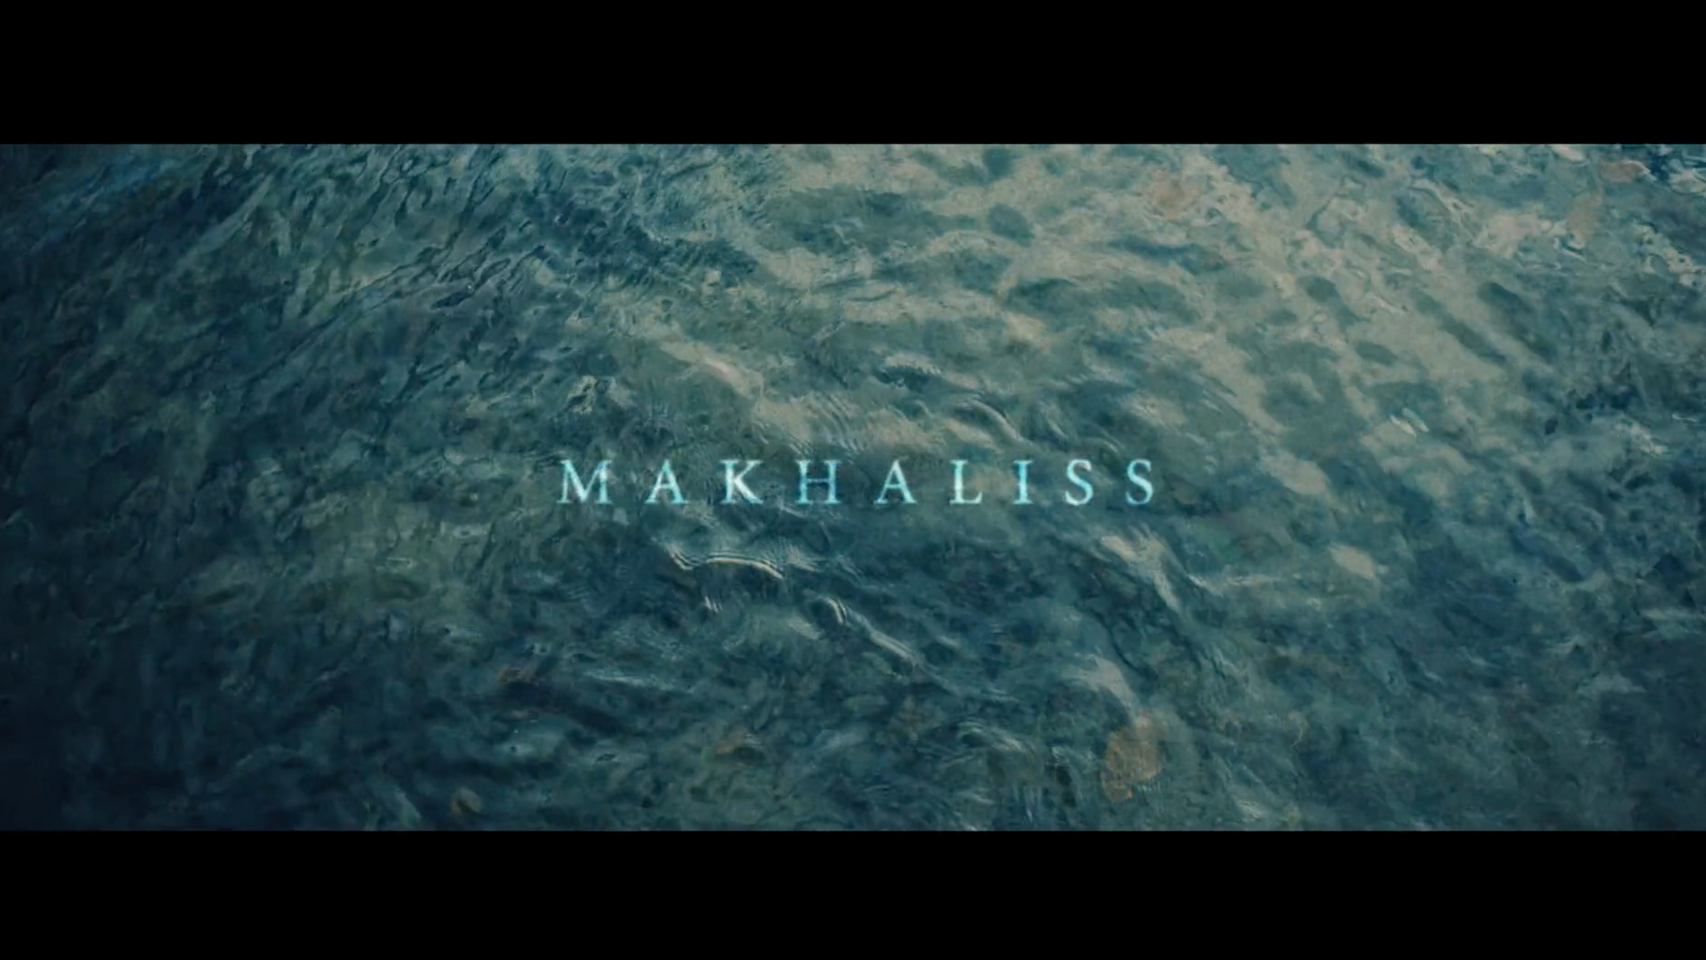 MAKHALISS - Official trailer - 